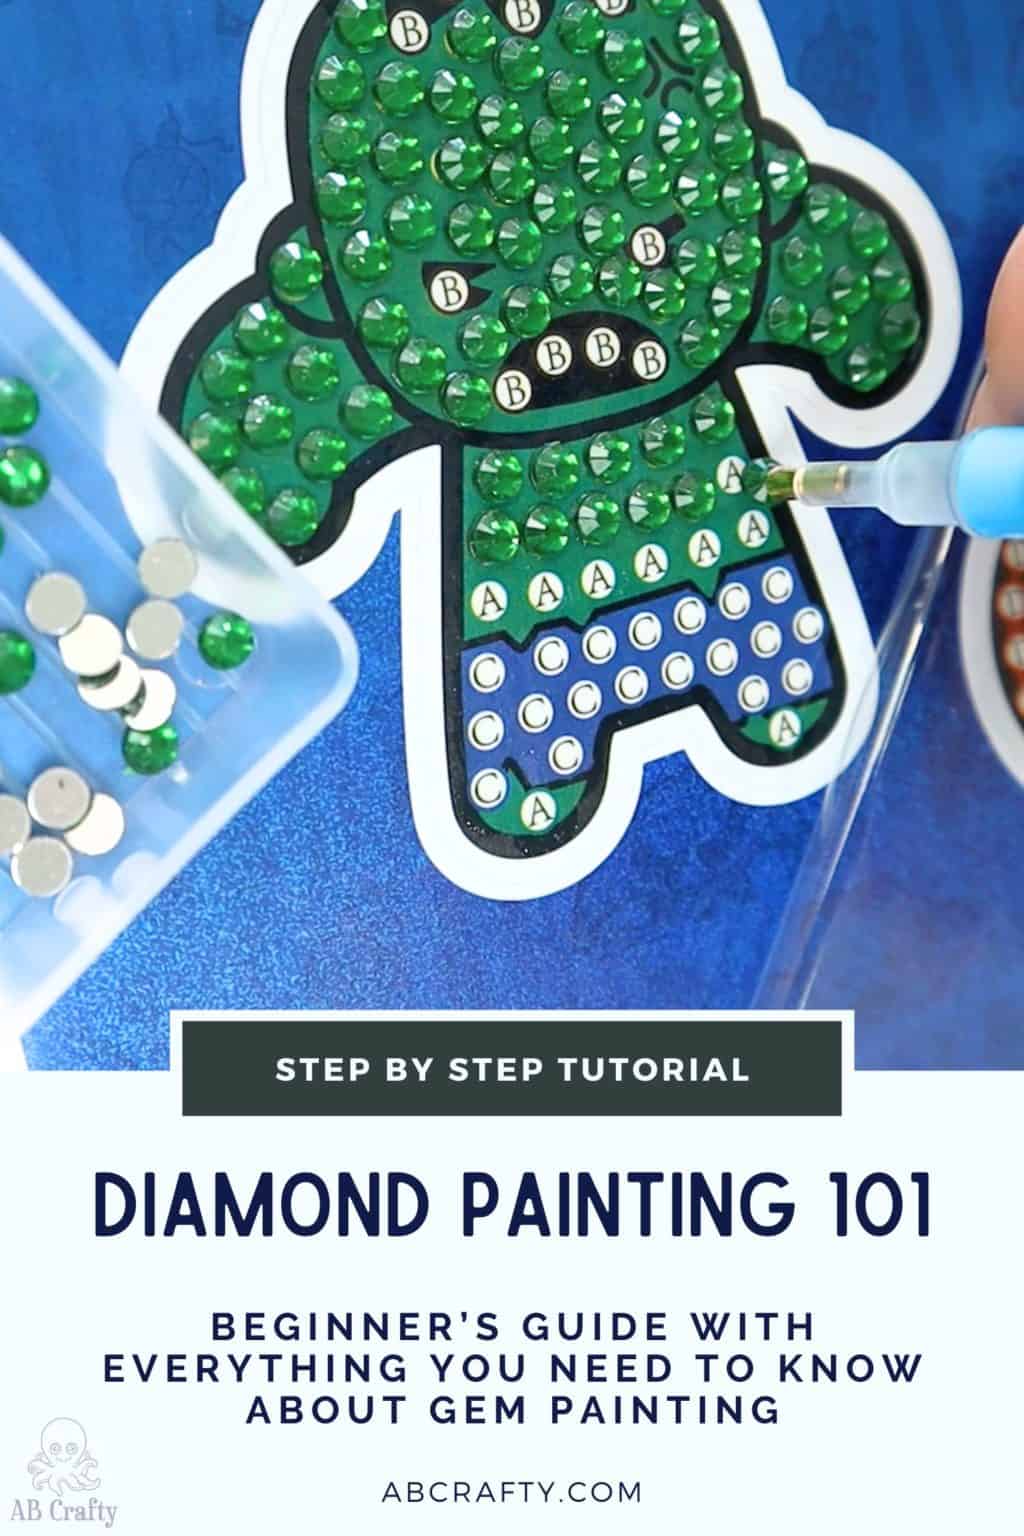 adding a green diamond to a hulk diamond painting sticker kit with the title 'step by step tutorial - diamond painting 101, abcrafty.com'